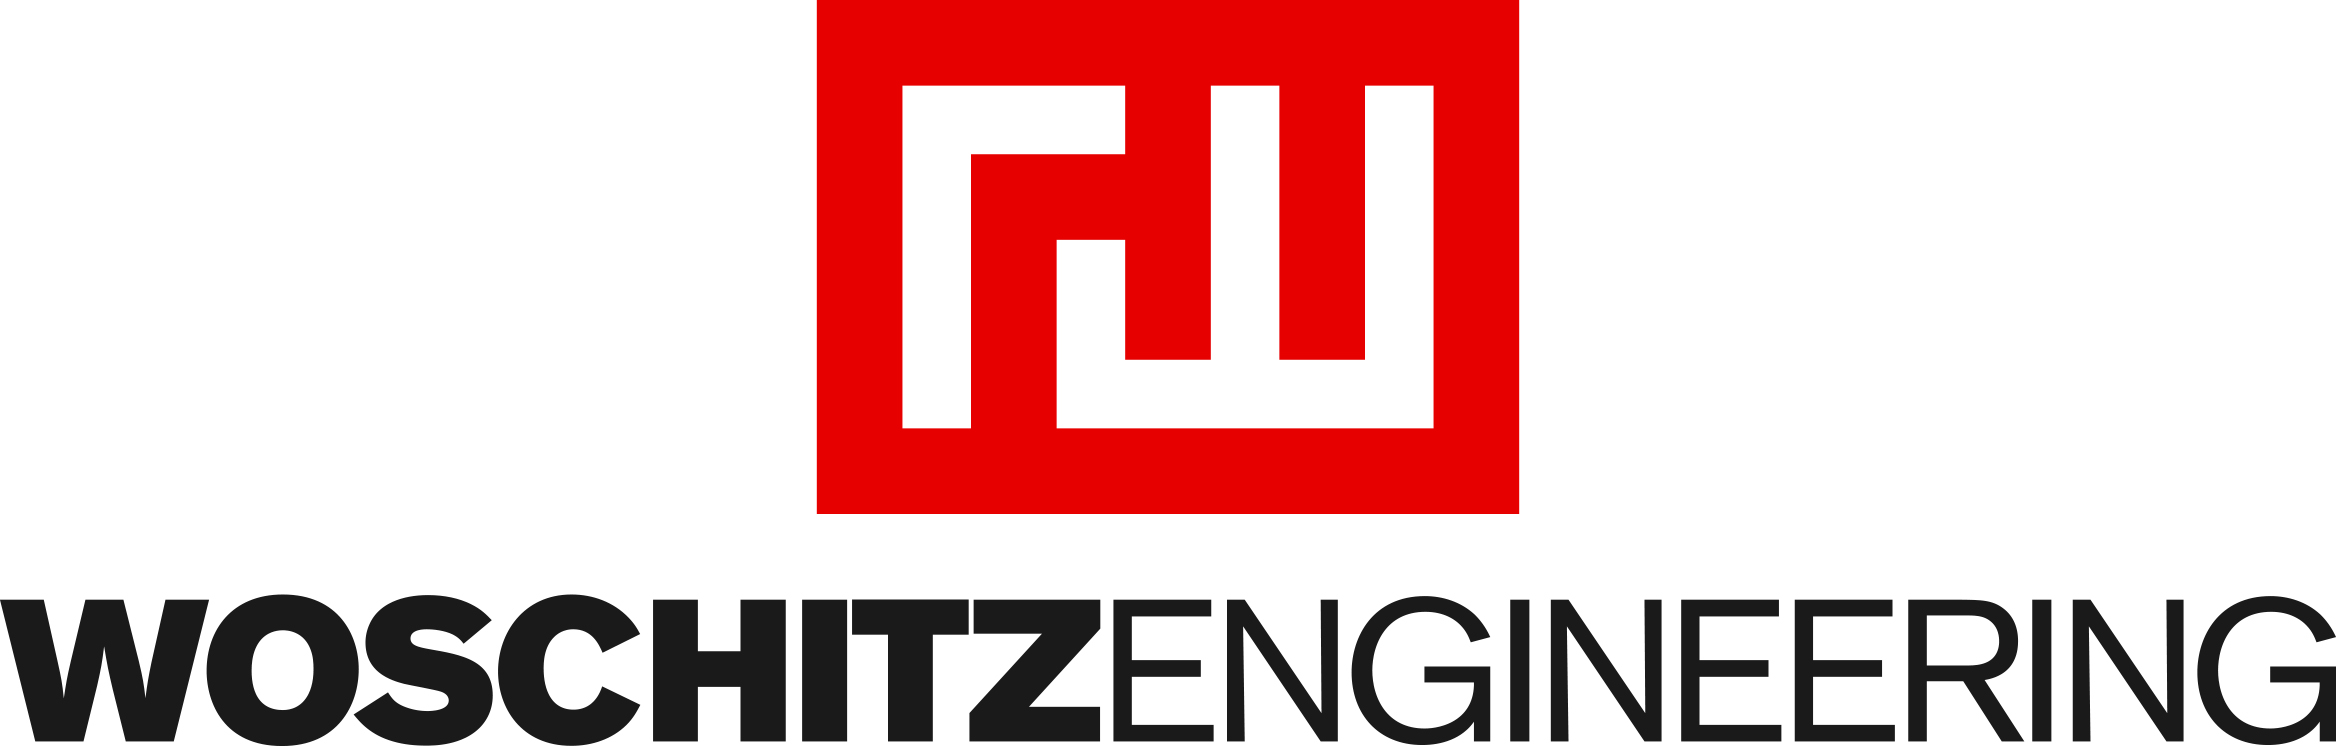 Woschitz Engineering ZT GmbH